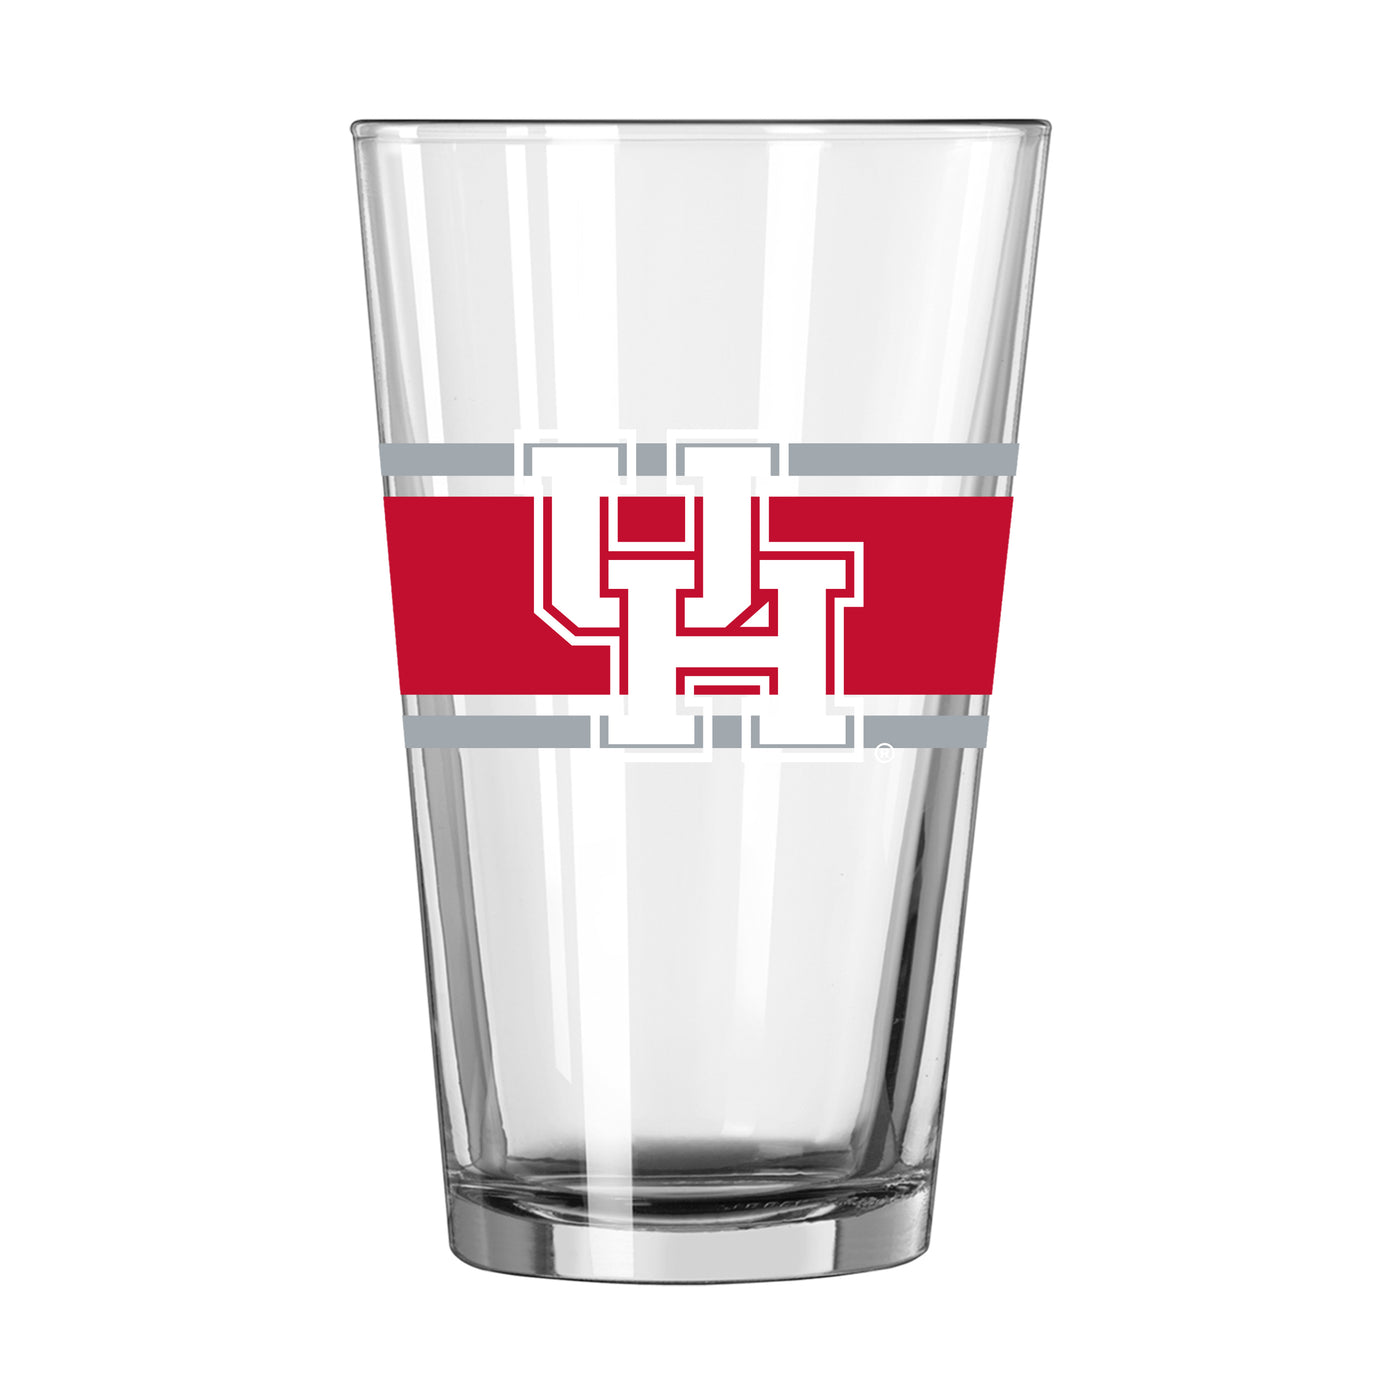 Houston 16oz Stripe Pint Glass